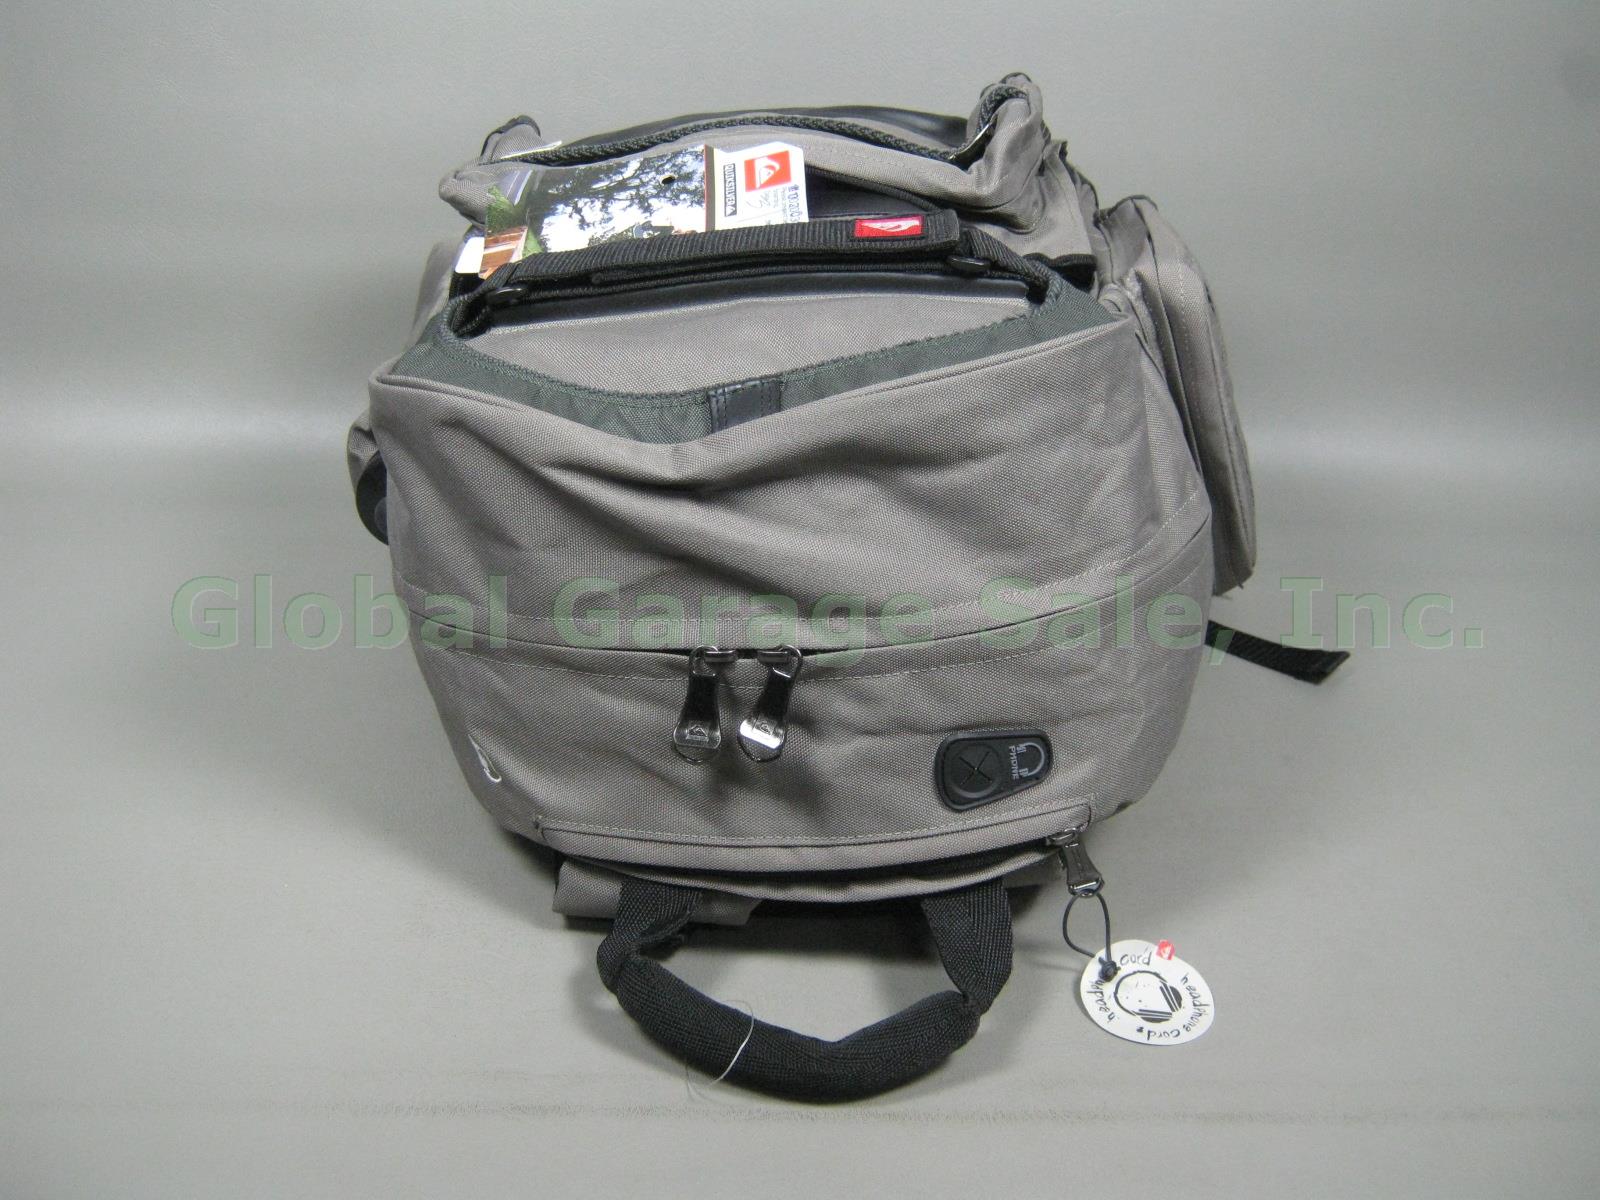 Rare NWT NOS Quiksilver City Pack Skate Bag Backpack Manufacturer Sample No Res! 3